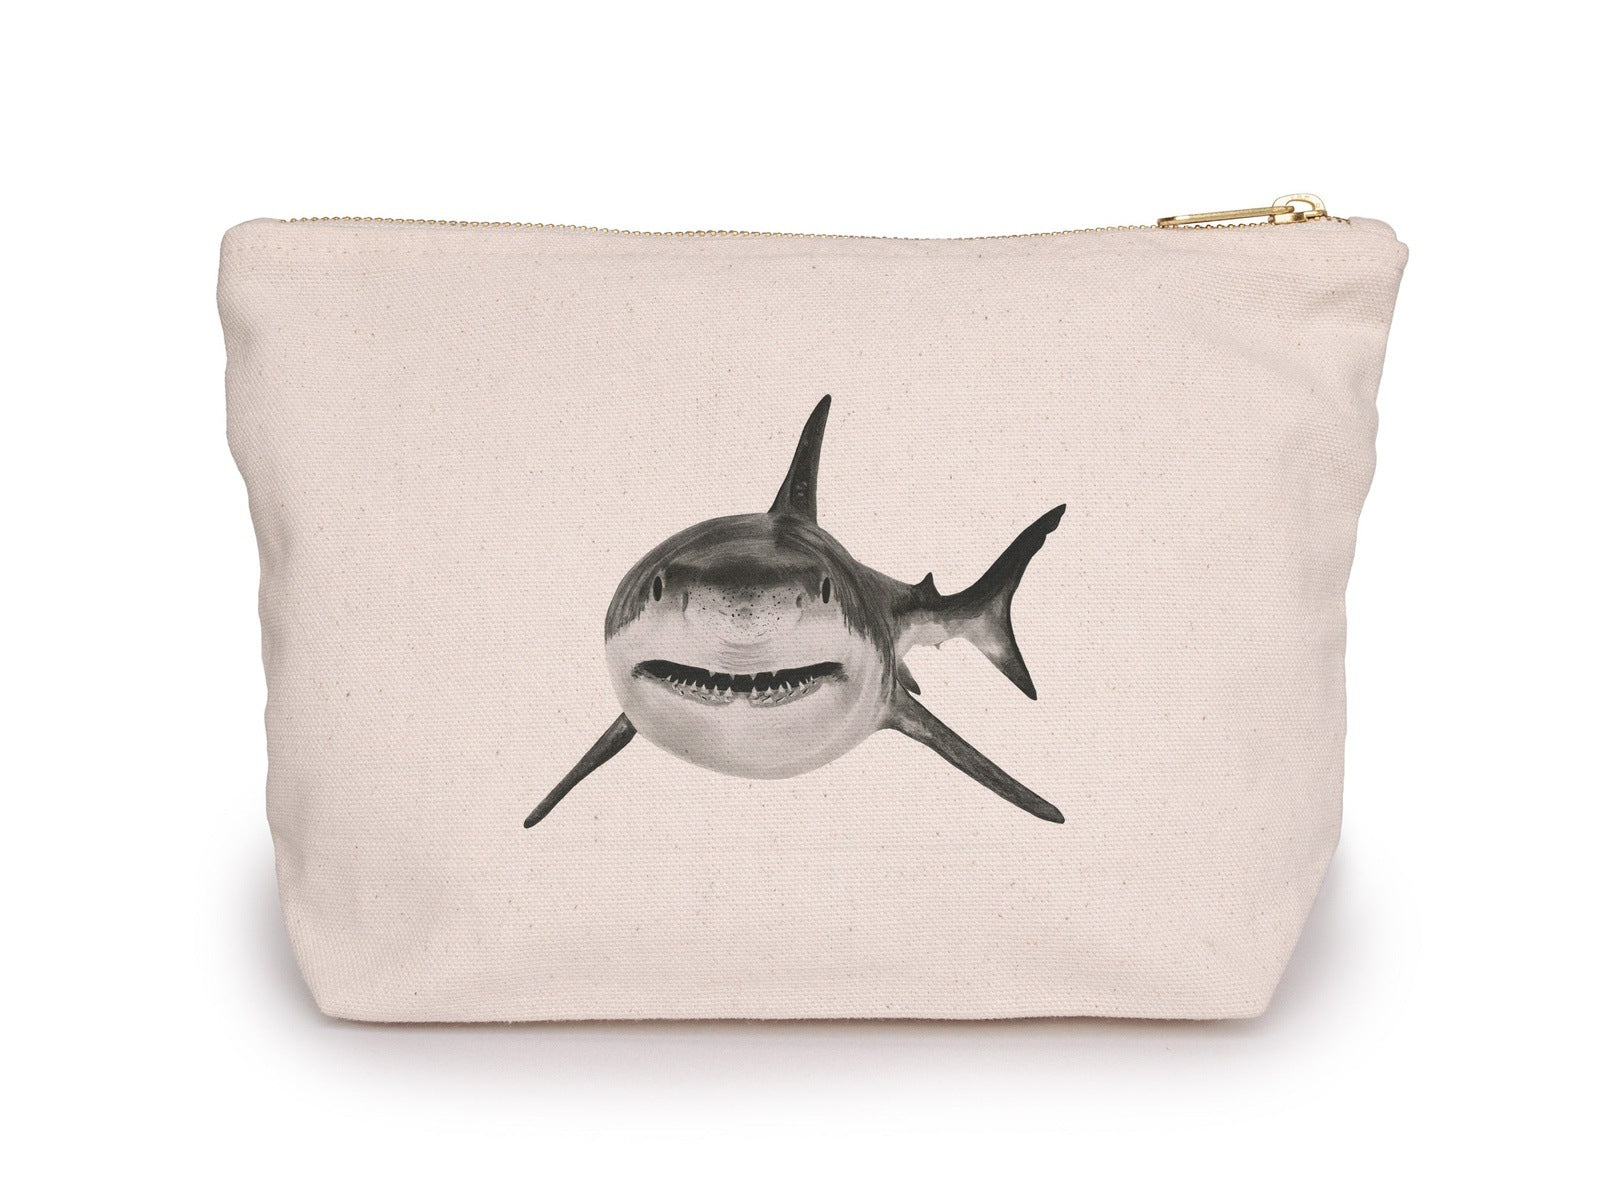 Shark Pouch Bag From Libra Fine Arts